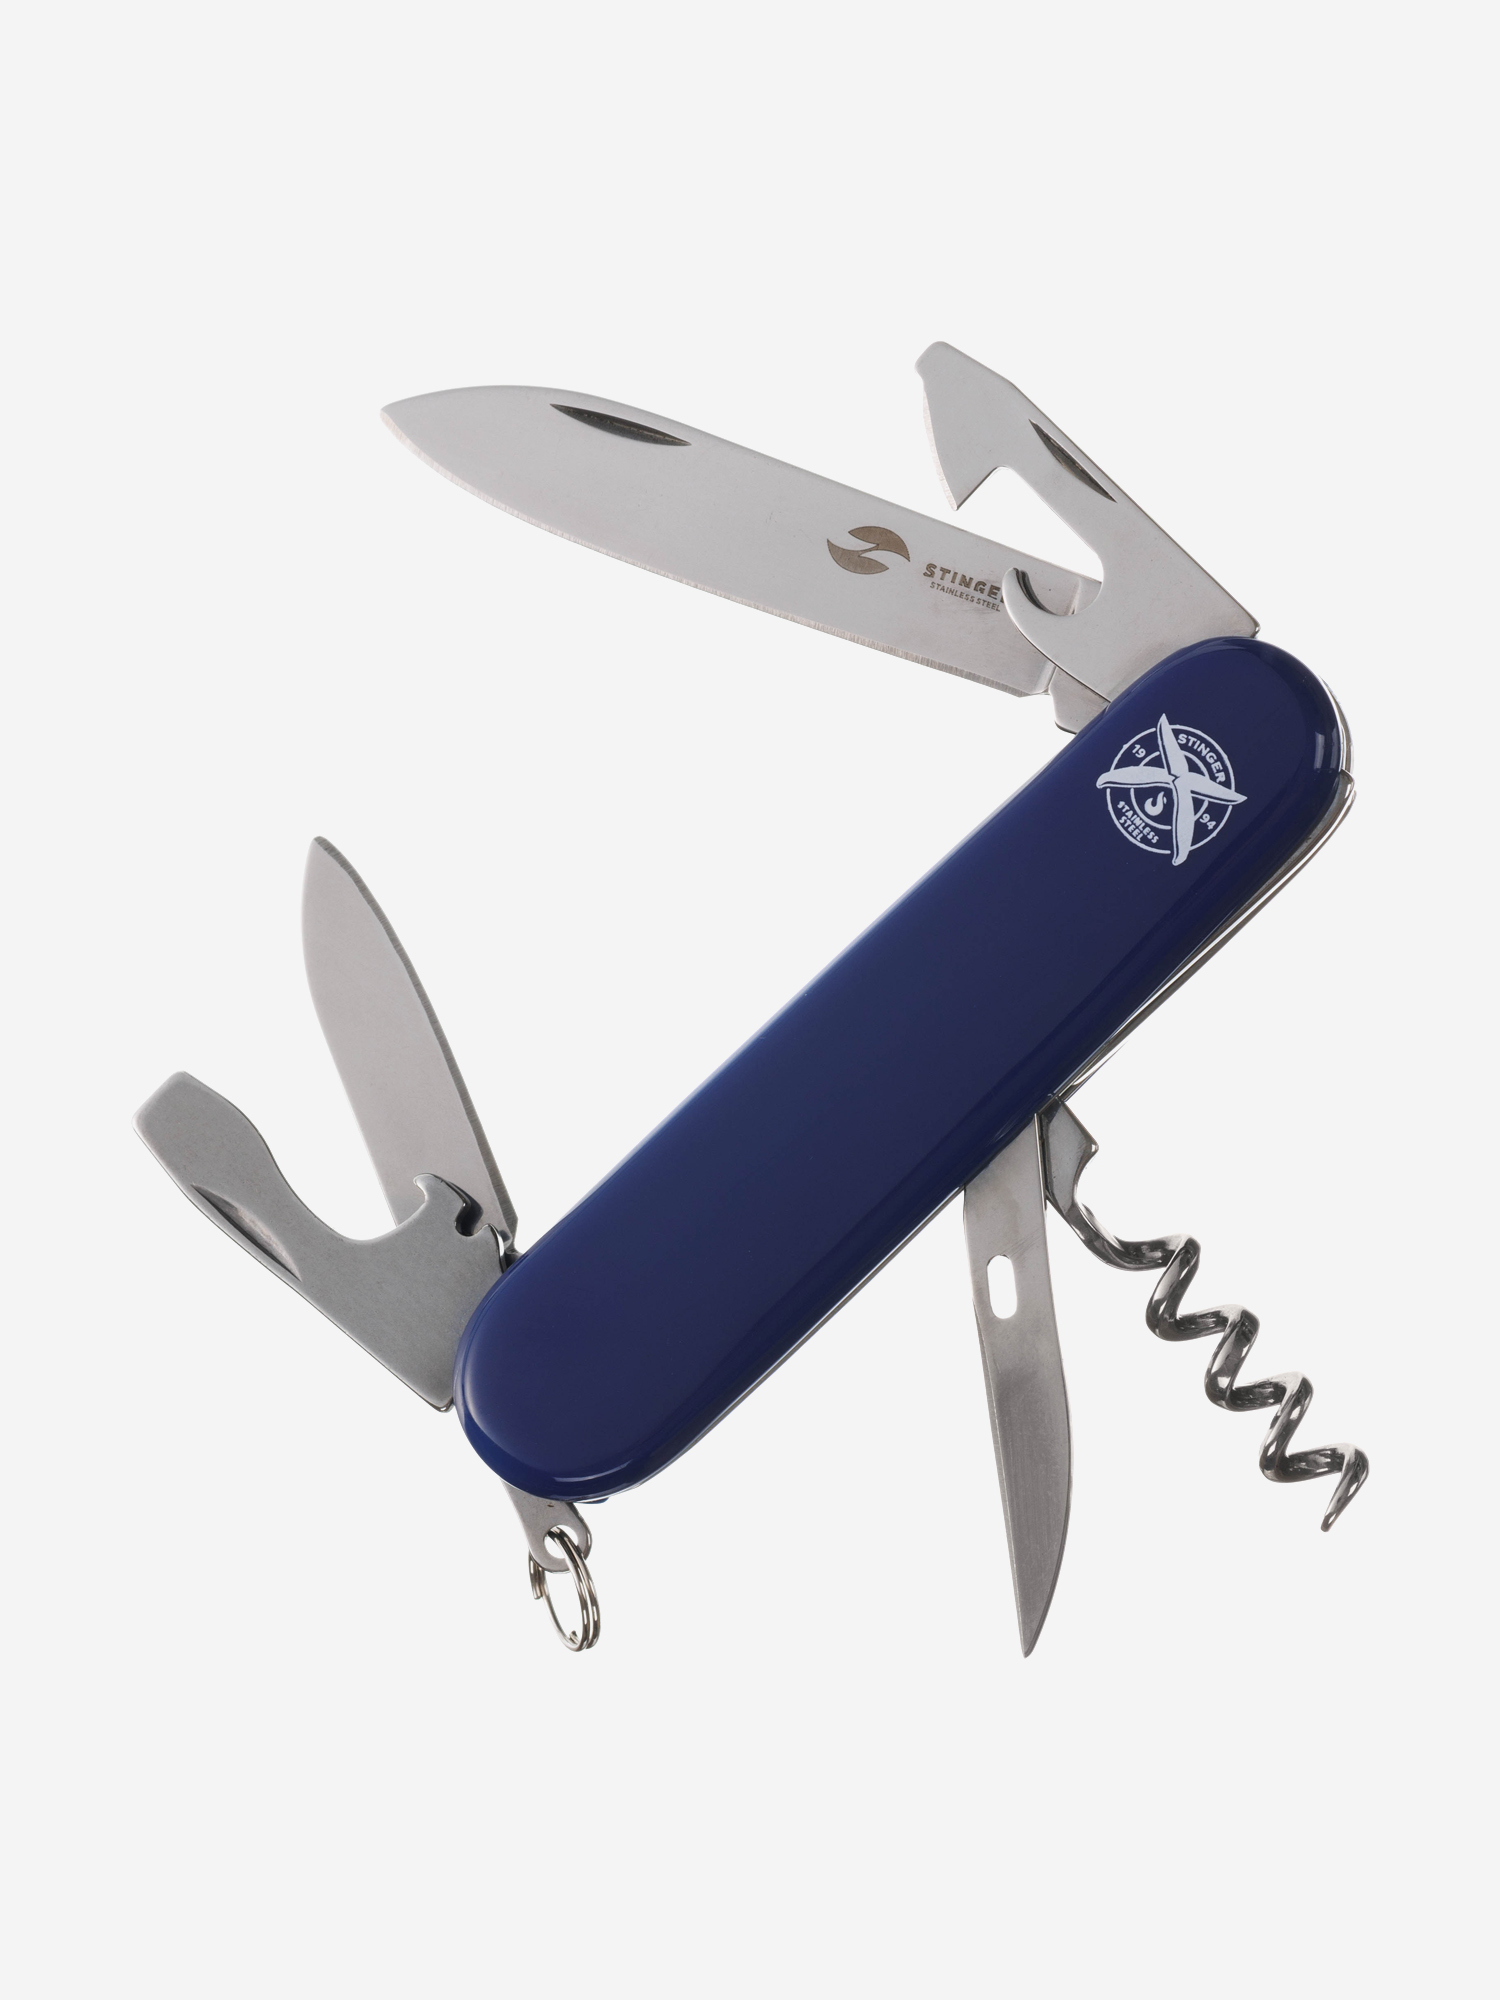 Нож перочинный Stinger, 90 мм, 11 функций, материал рукояти: АБС-пластик (синий), Синий нож stinger 114 3 мм серый подарочная упаковка